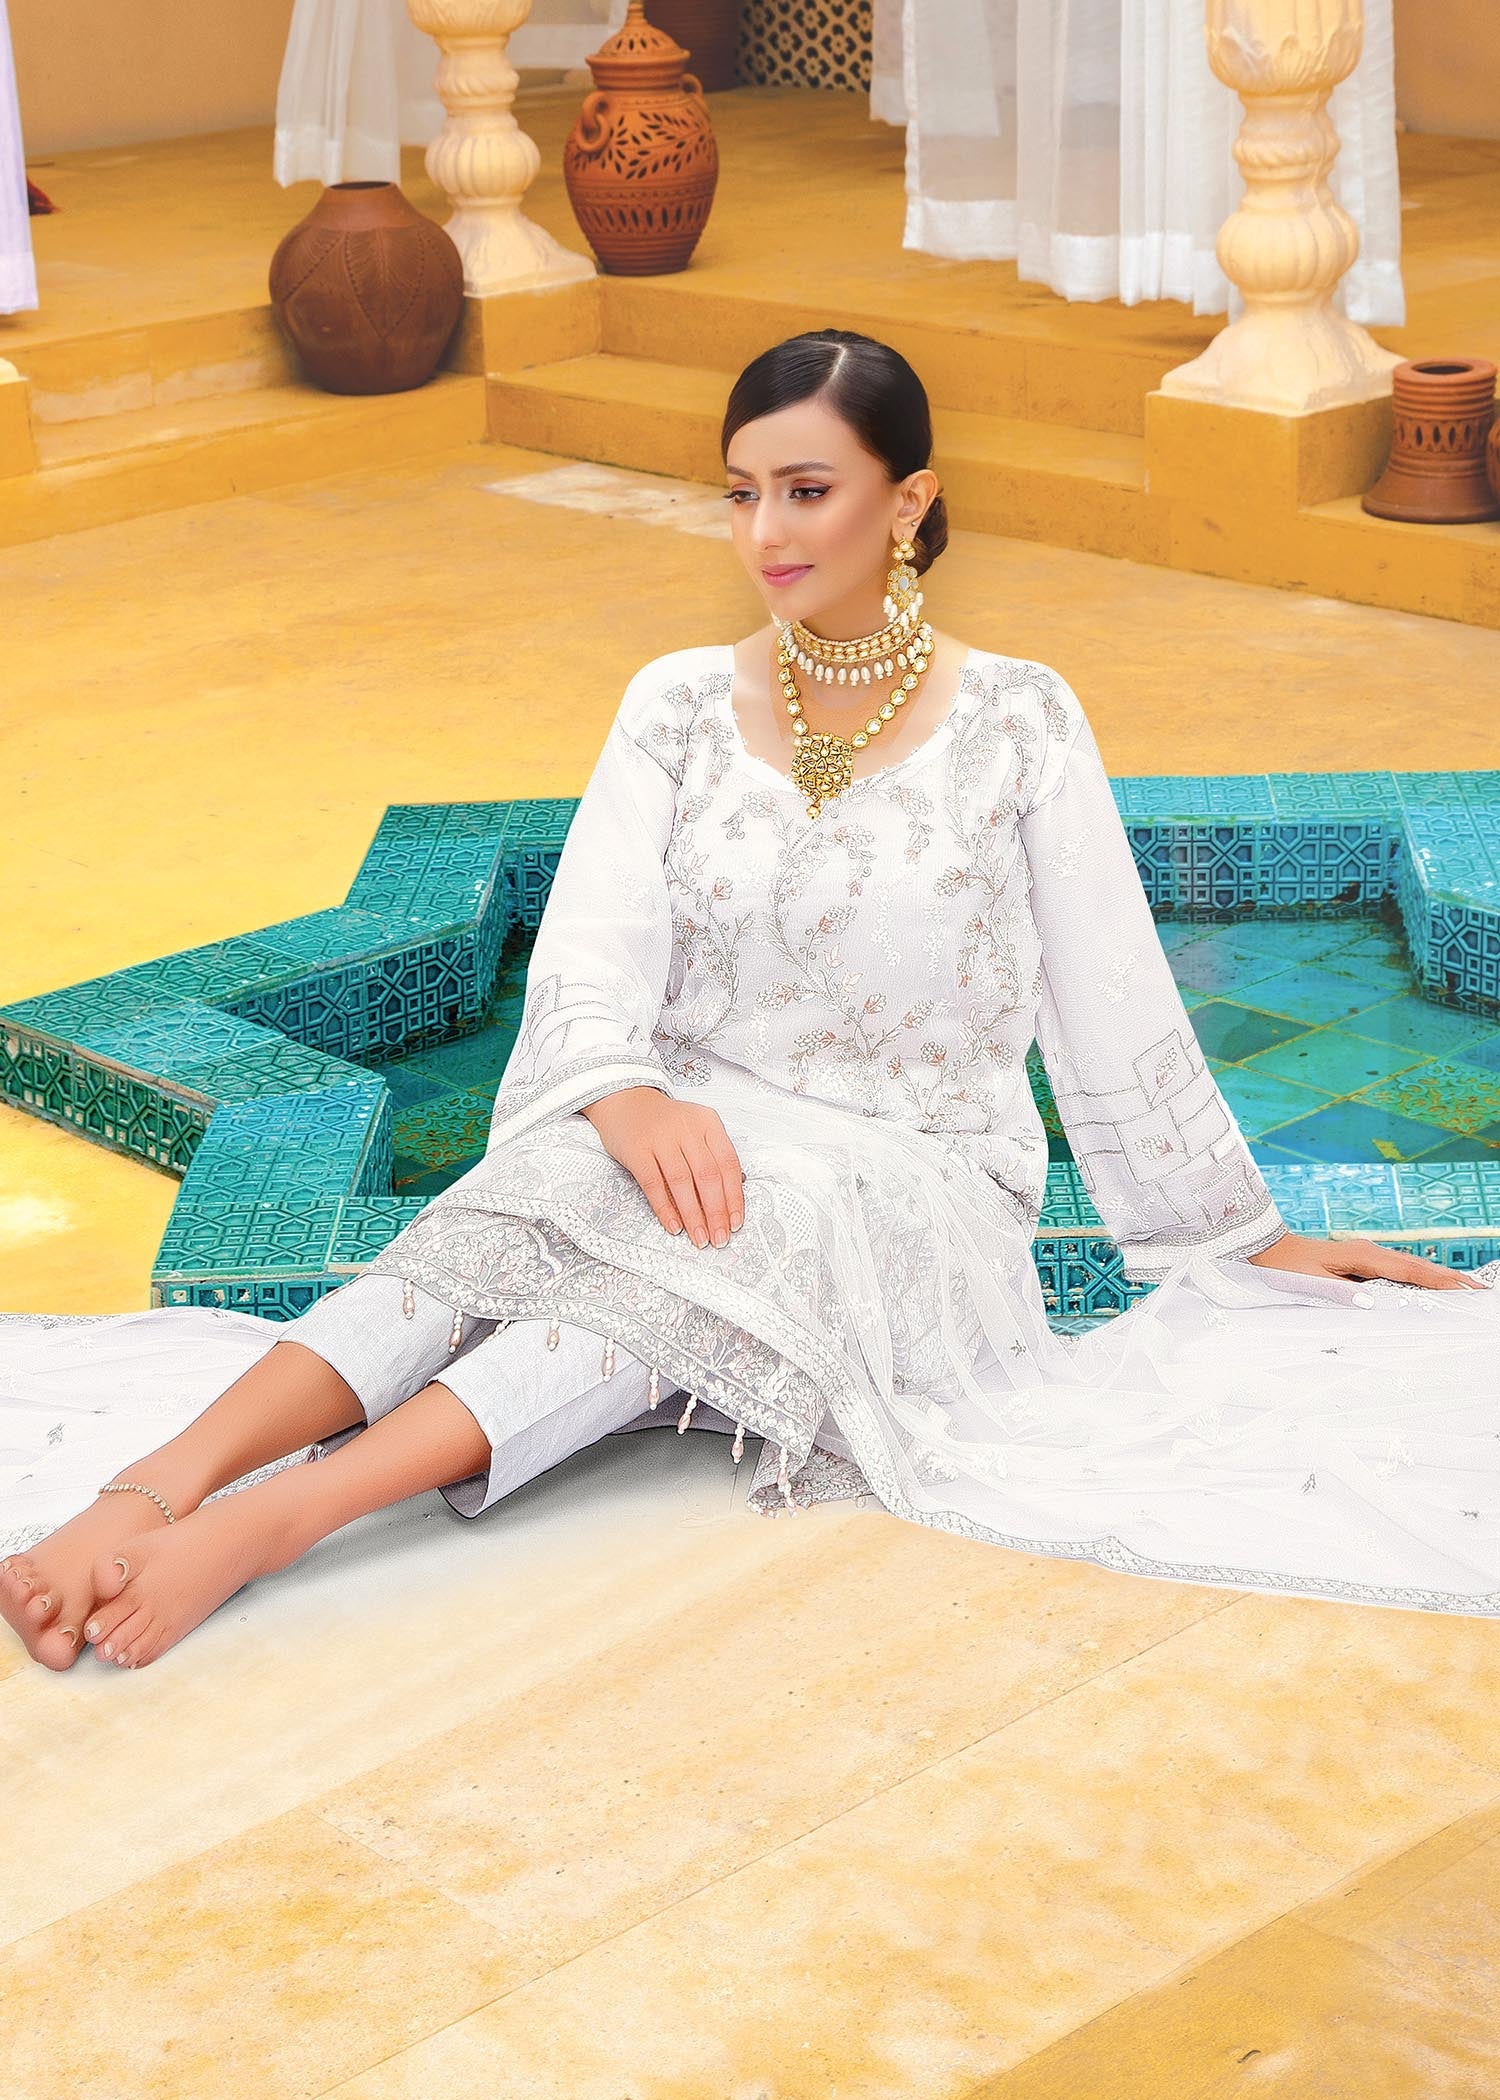 MAH-E-ROOH 3 Piece Chiffon White Eid Outfit 3705 - Desi Posh